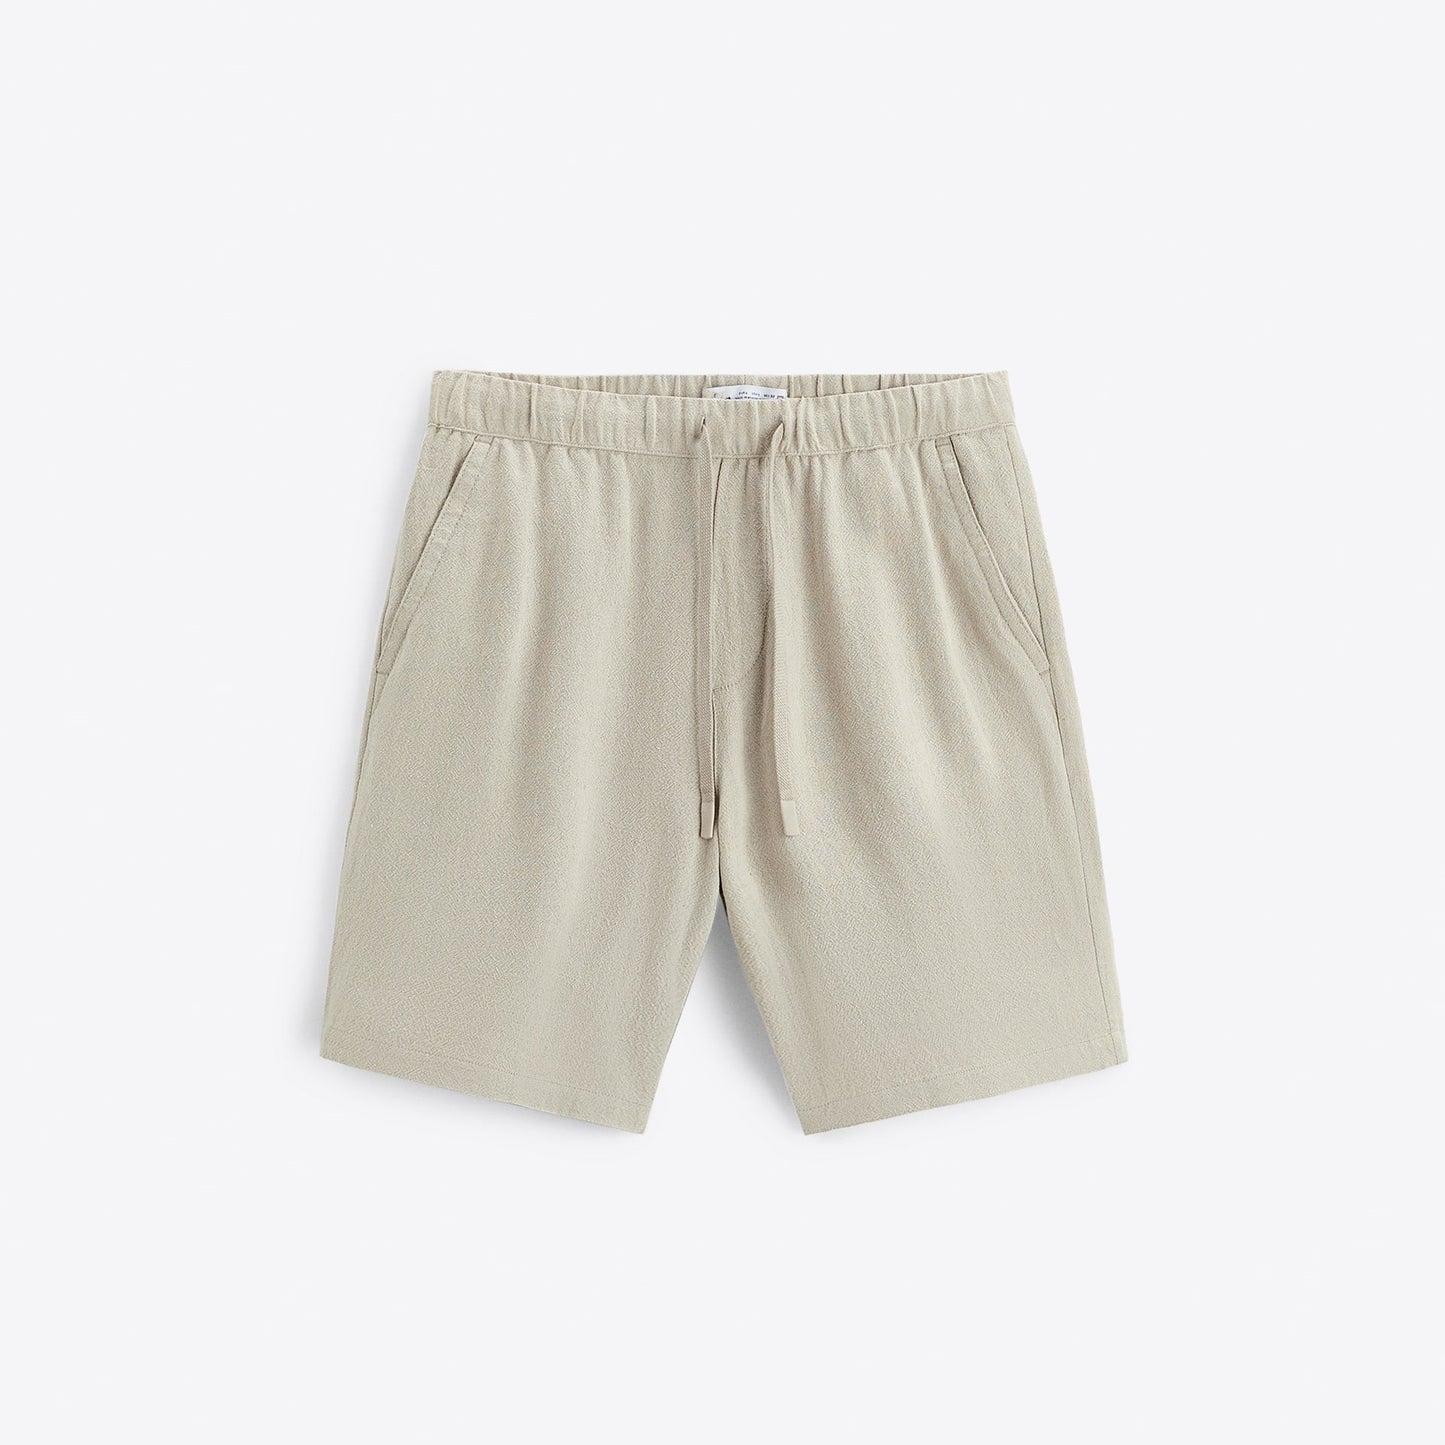 Viscose Linen Blended Casual Shorts